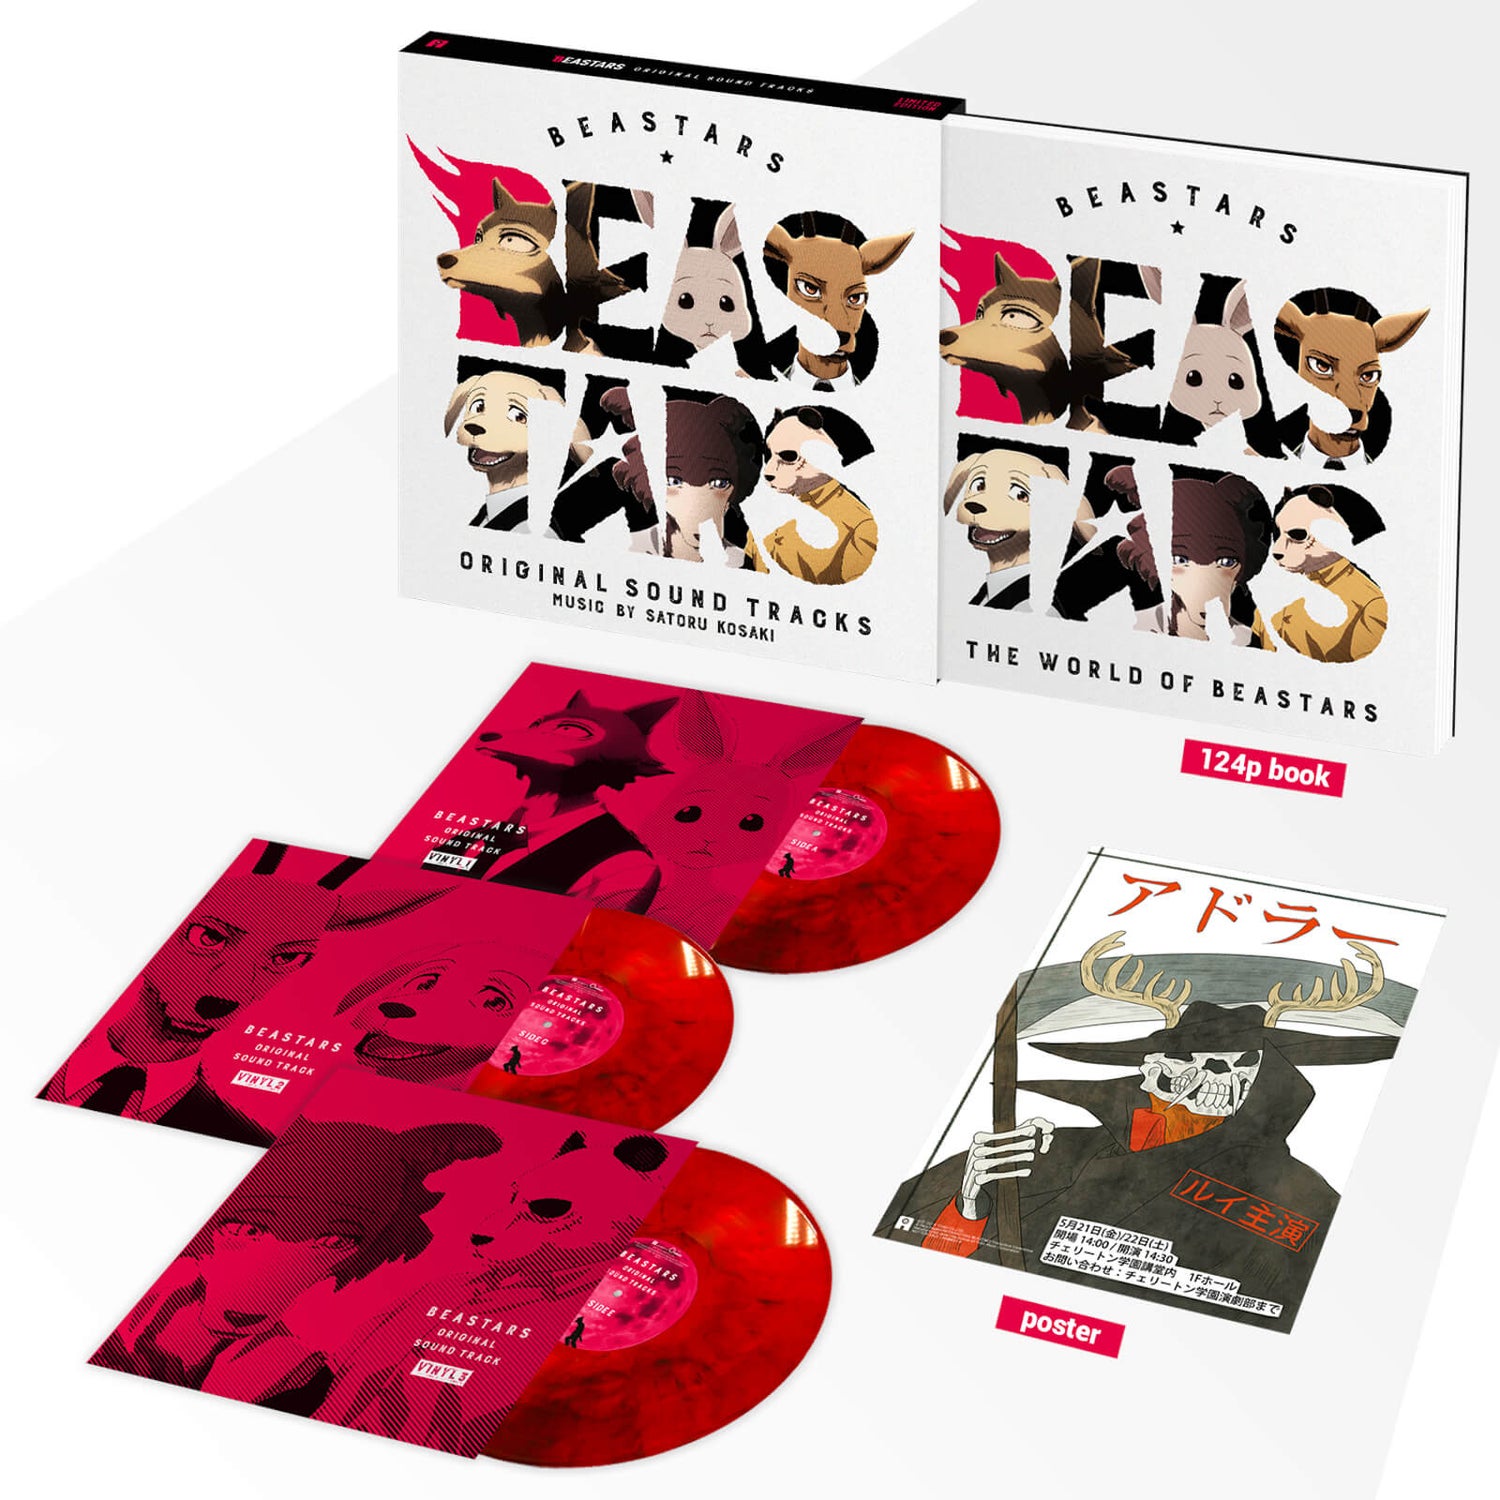 Anime Limited - Beastars (Original Soundtrack) 180g 3xLP Deluxe Edition Box Set (Zavvi Exclusive Rot)